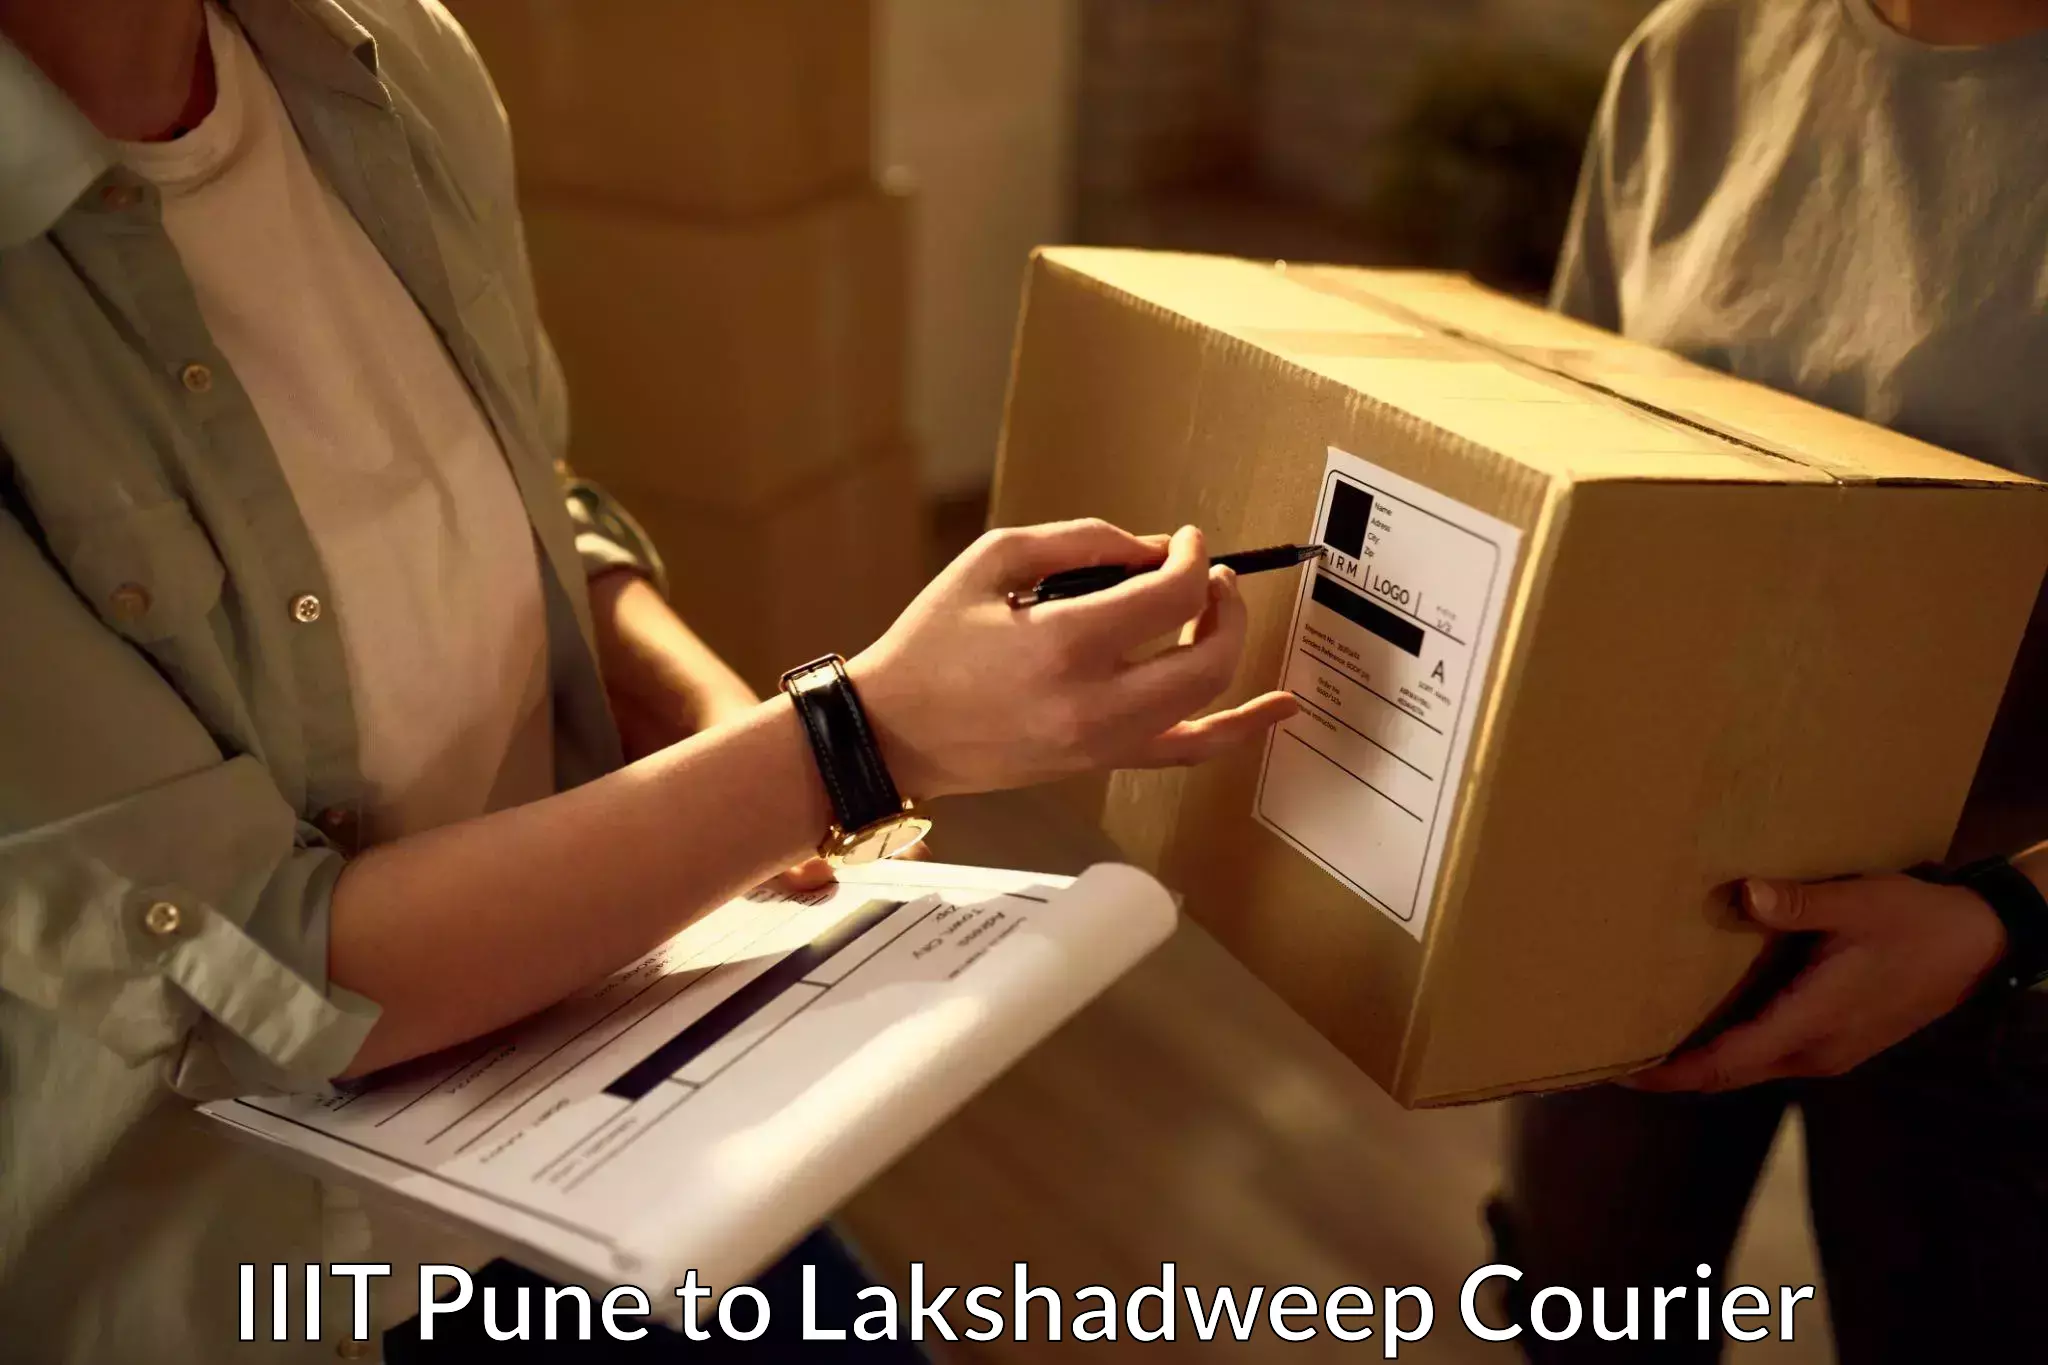 User-friendly courier app IIIT Pune to Lakshadweep